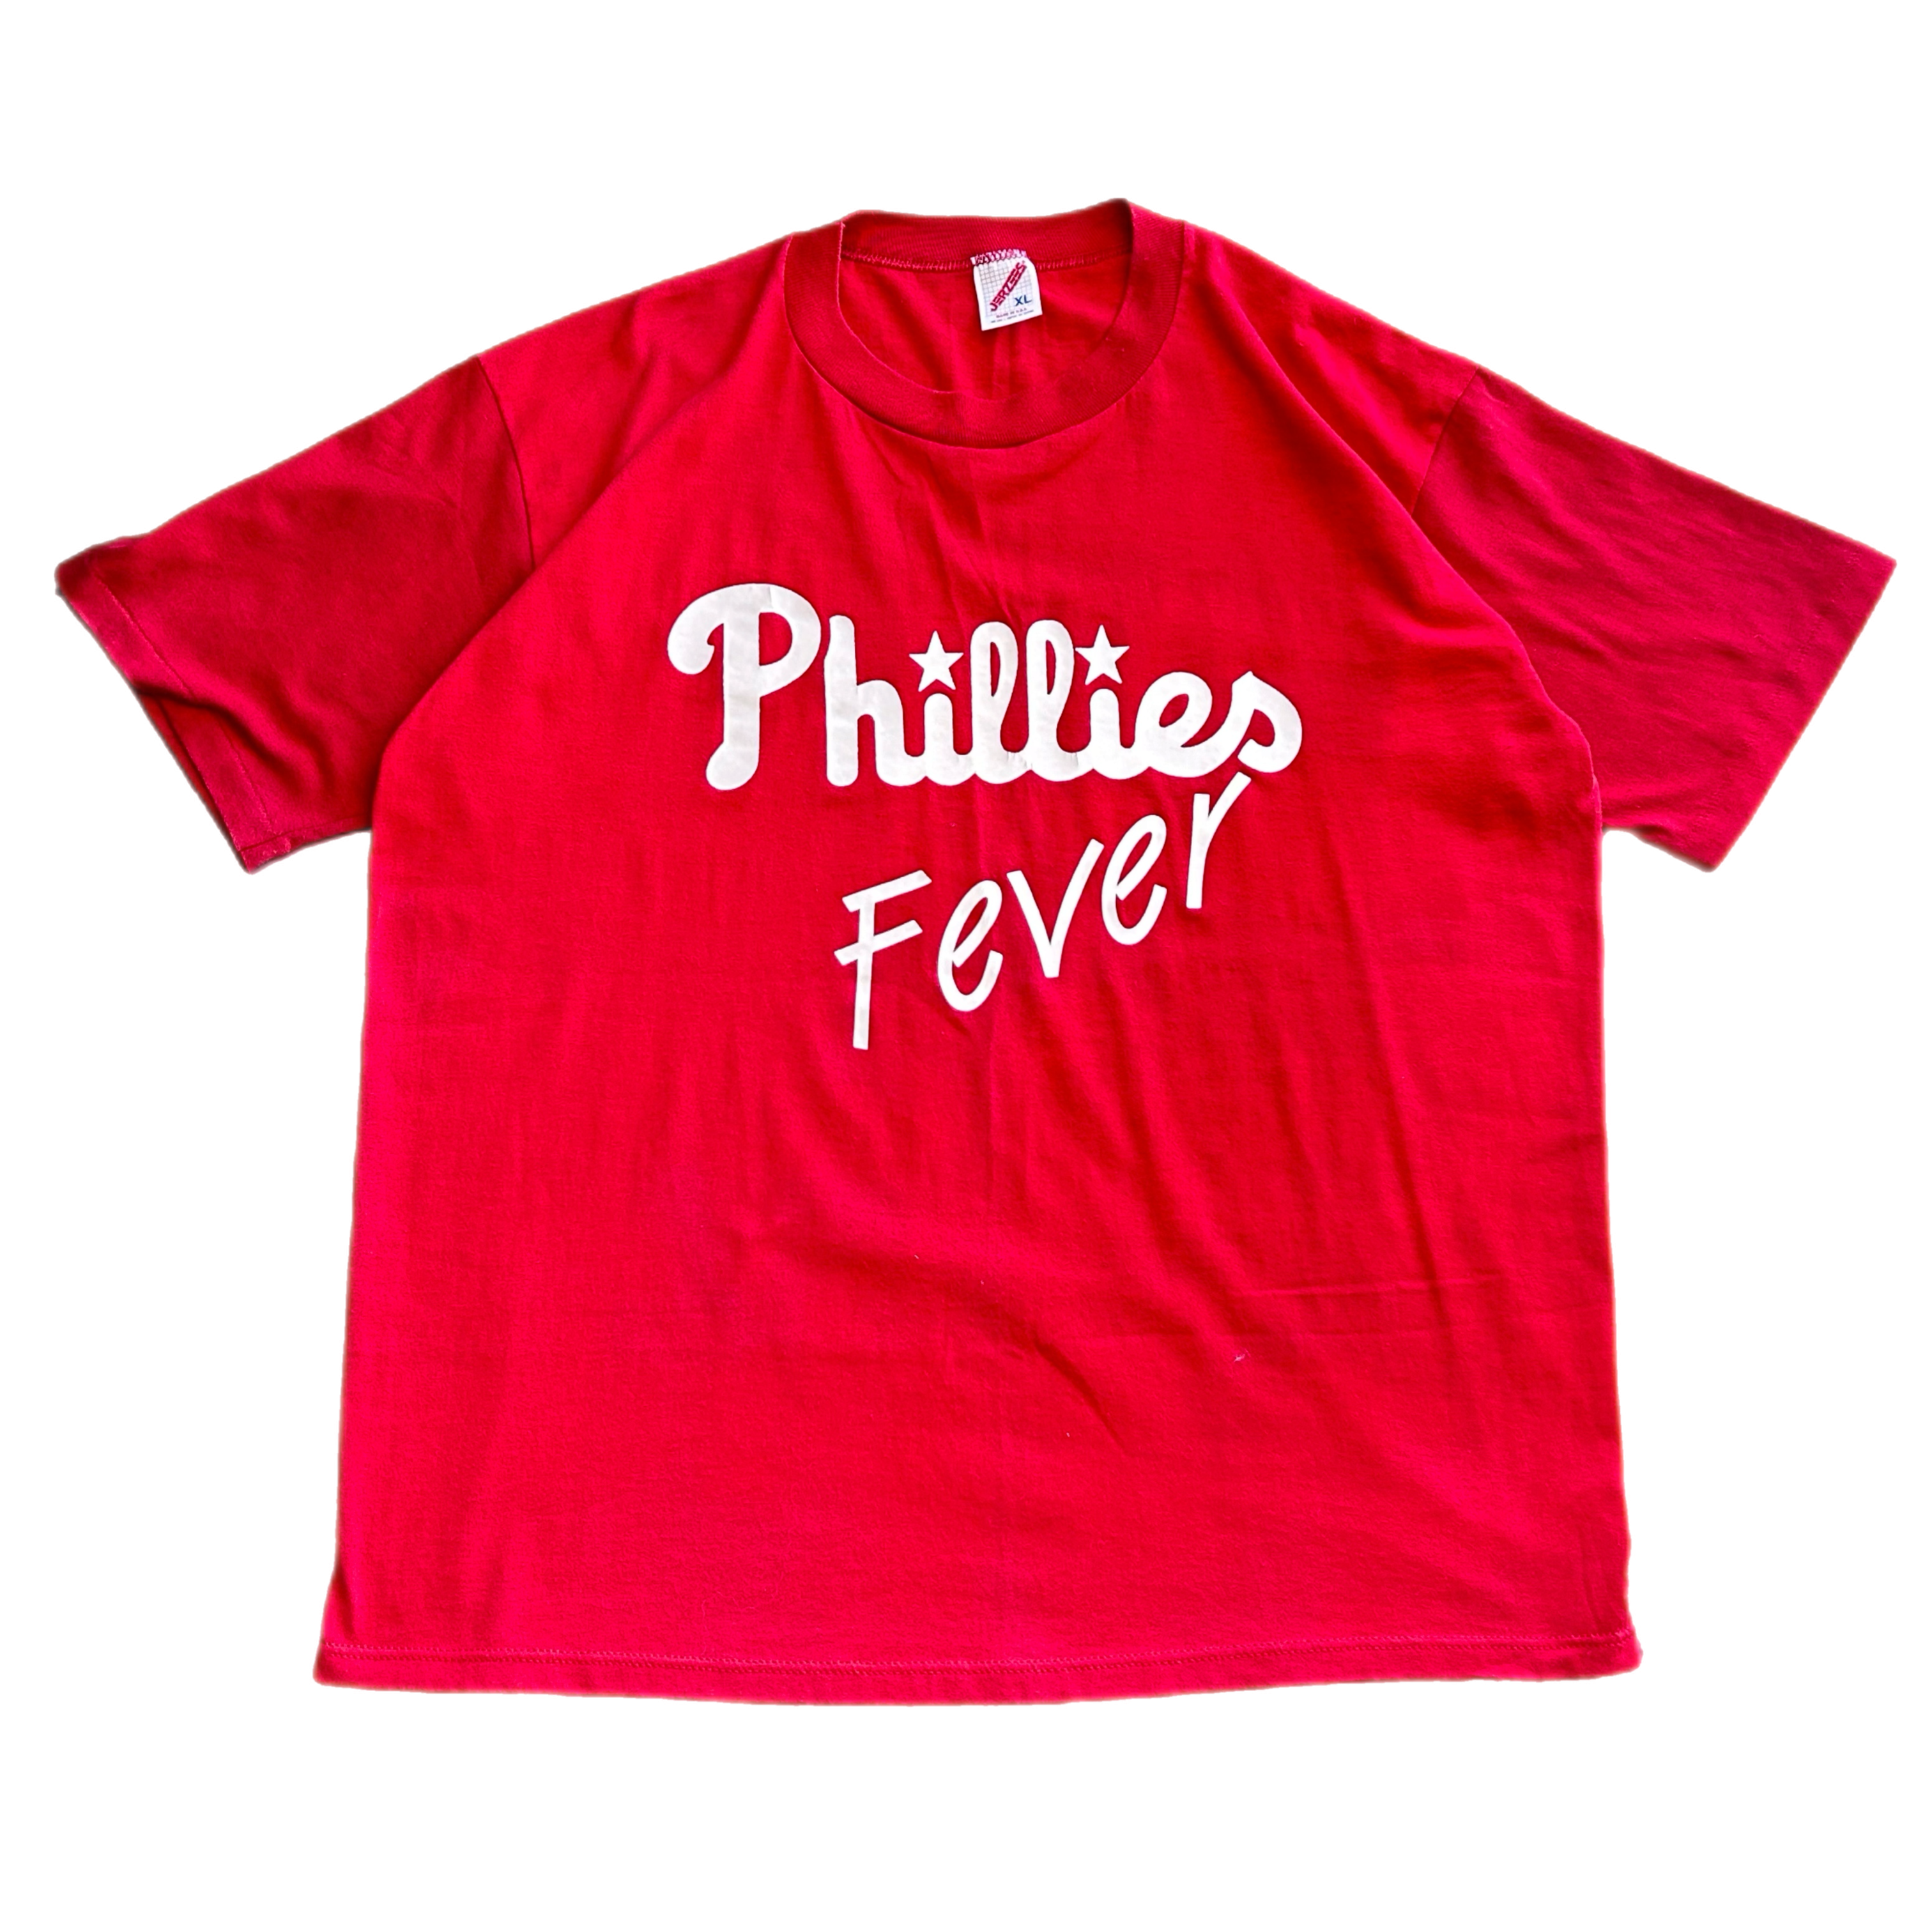 Vintage 1990’s Philadelphia Phillies Fever Tee